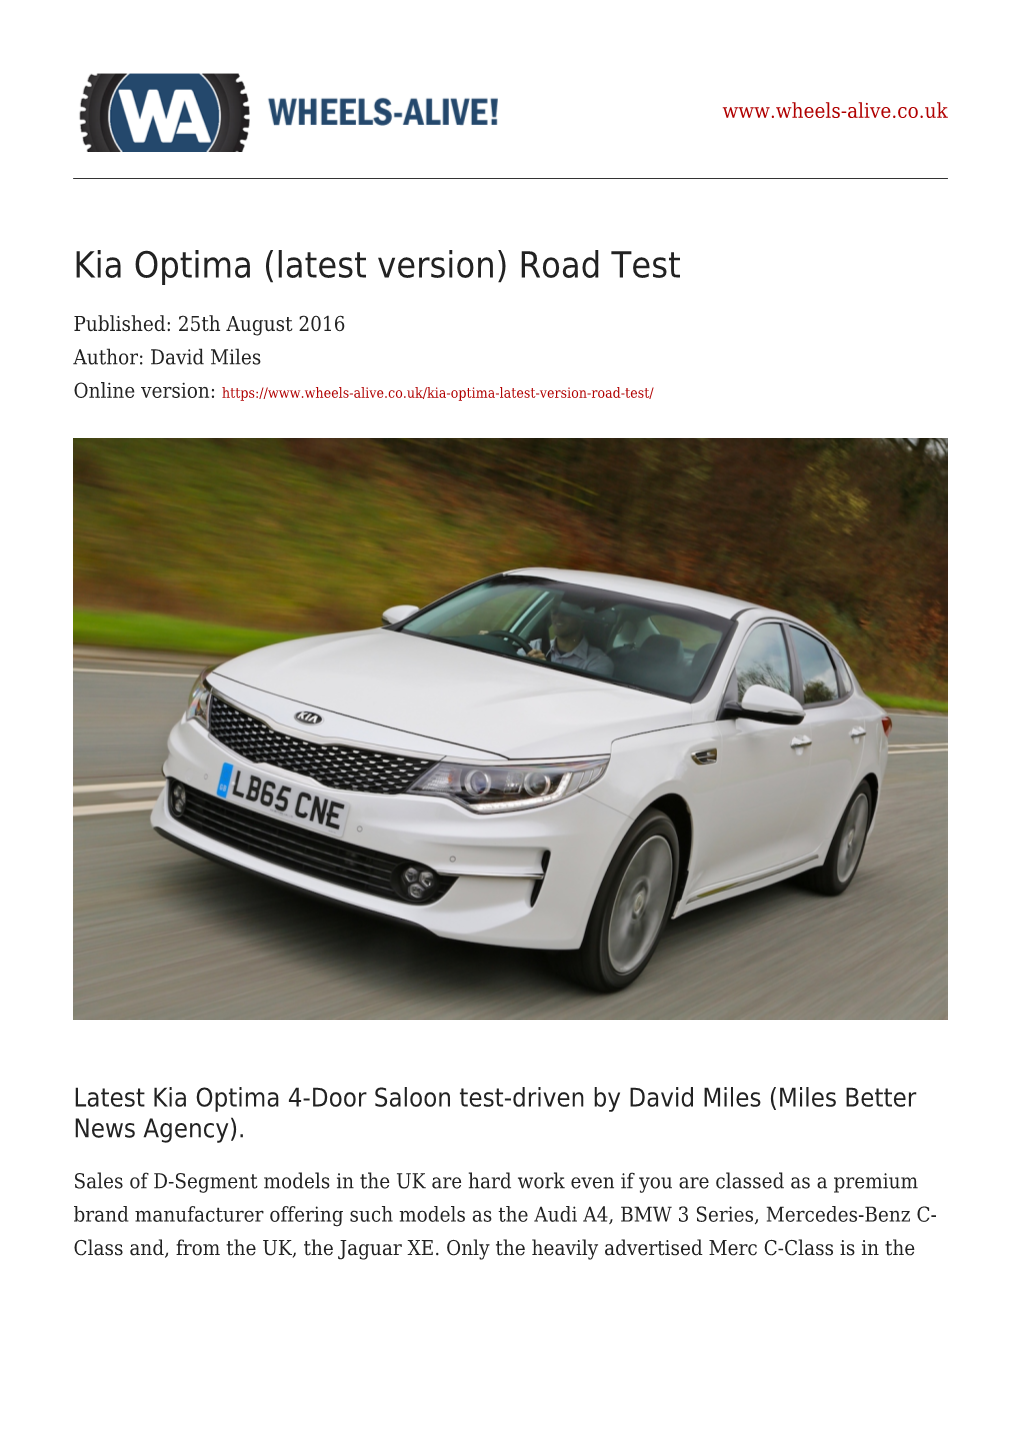 Kia Optima (Latest Version) Road Test